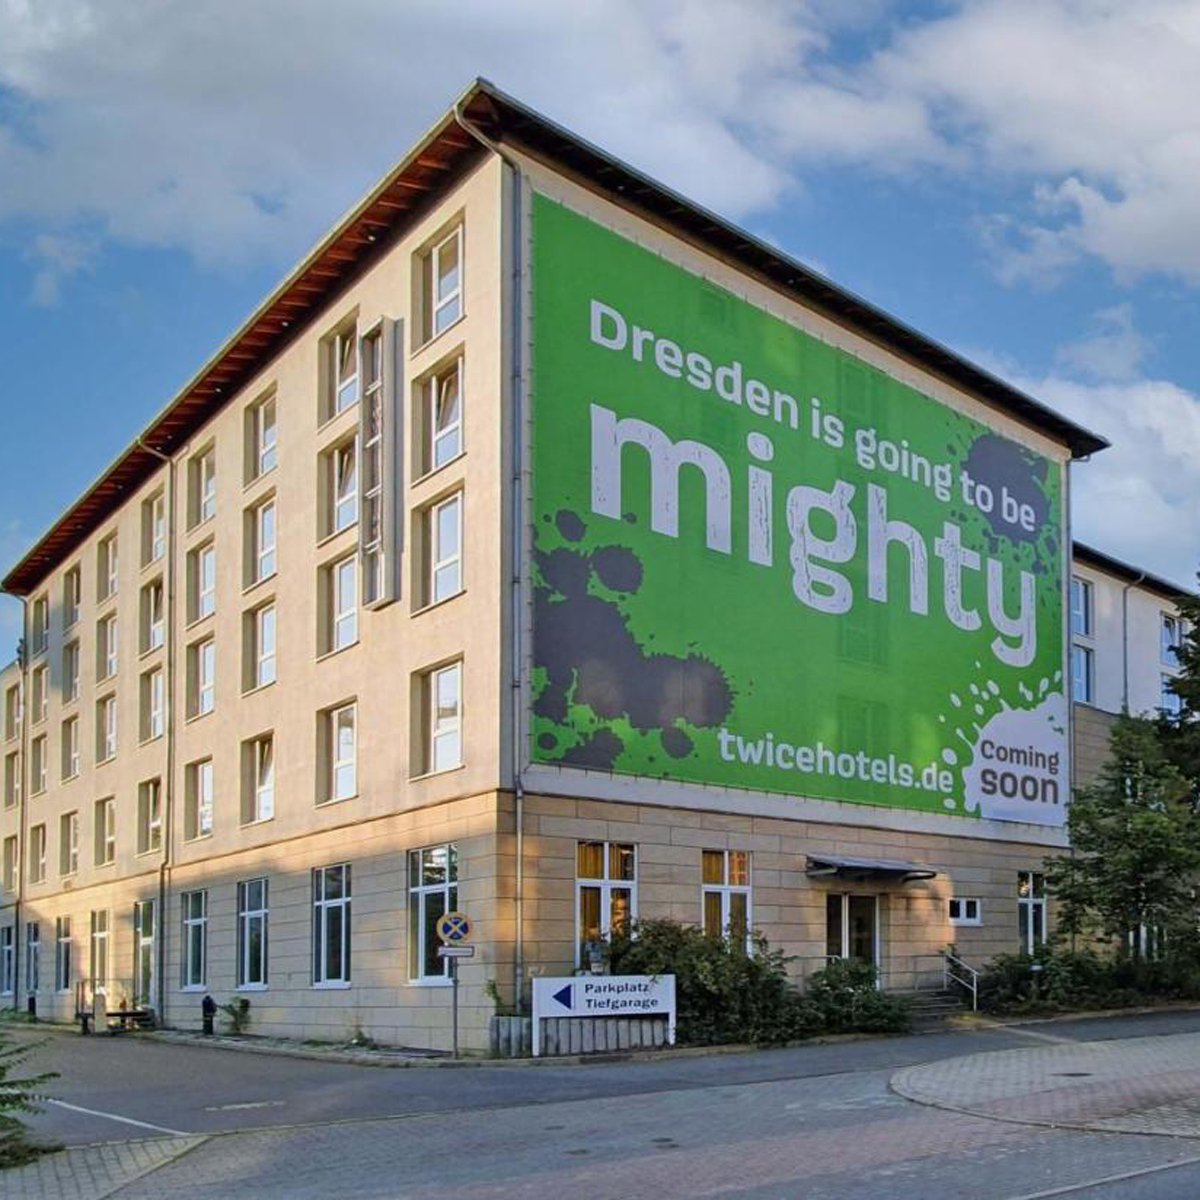 mightyTwice Hotel Dresden